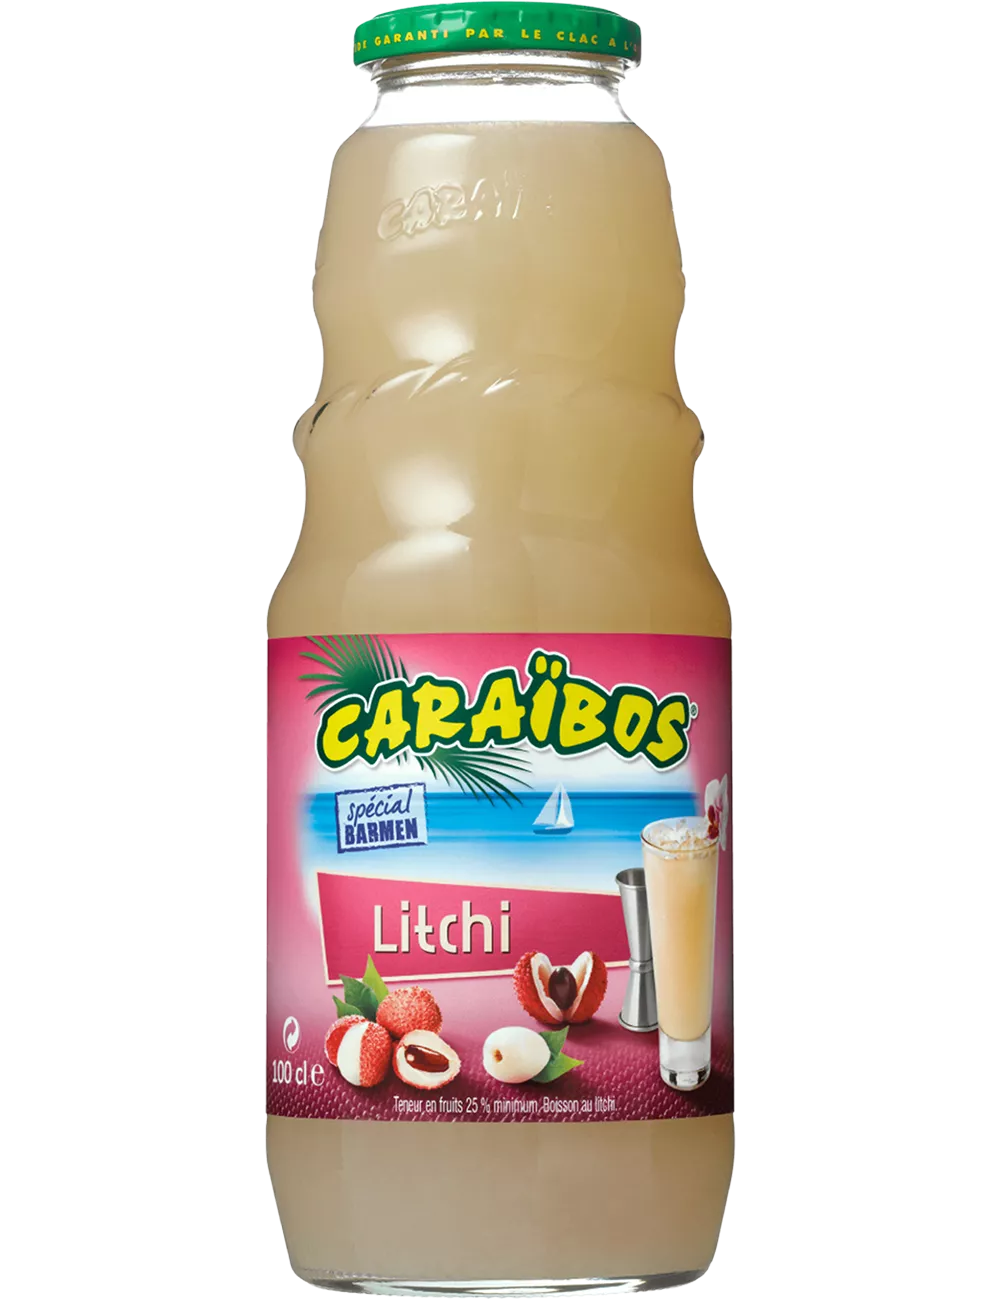 Nectar de Litchi - Caraïbos